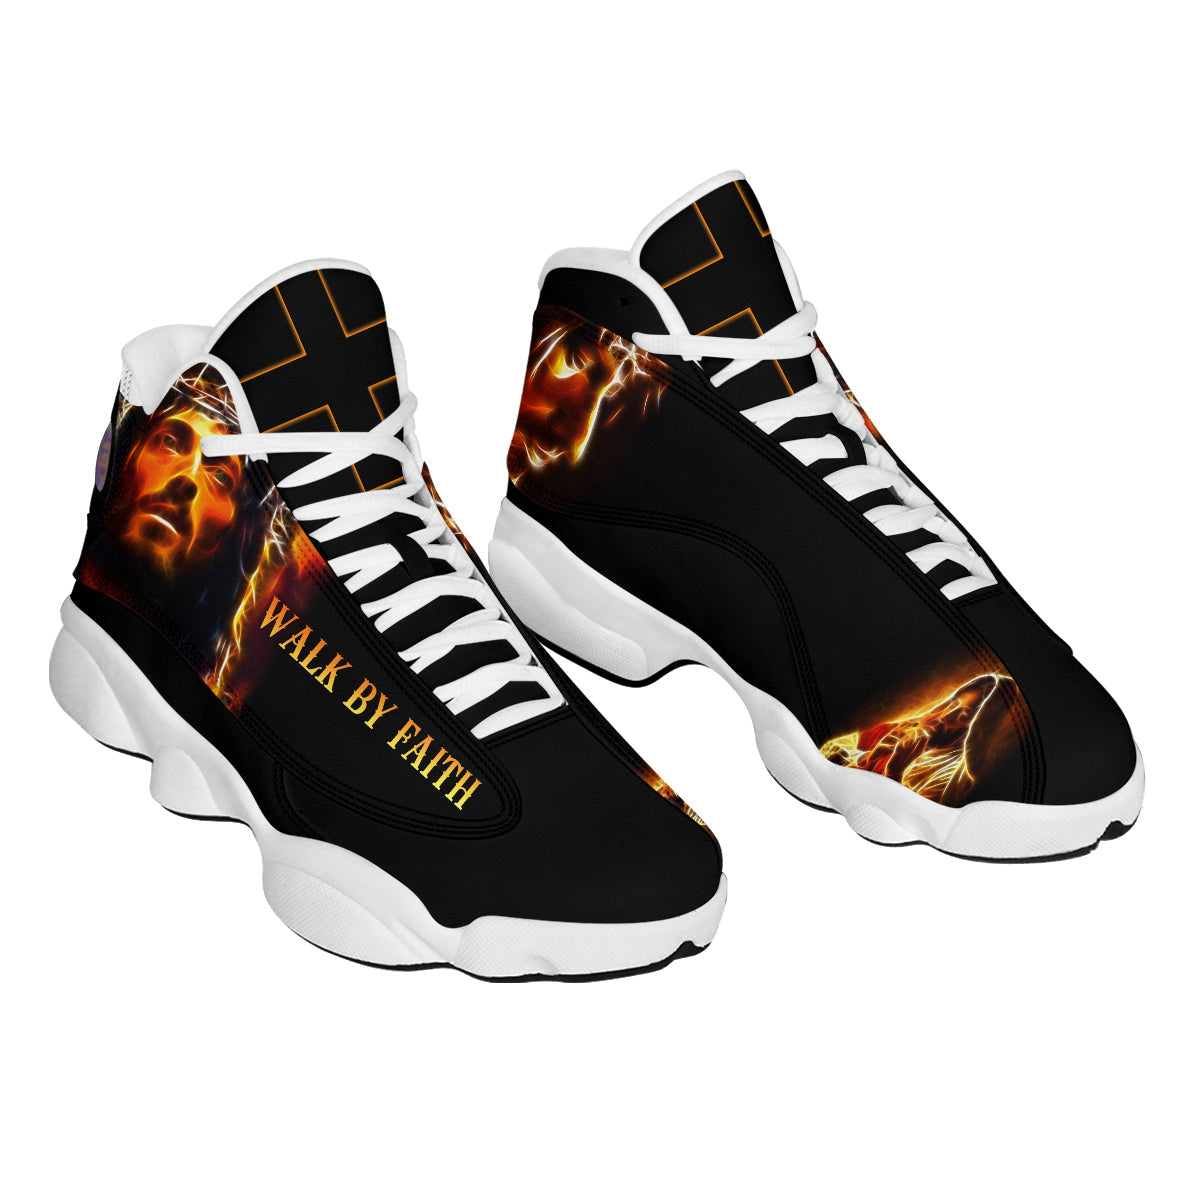 Walk By Faith Portrait Of Jesus PersonalizedJesus Basketball Shoes For Men Women - Christian Shoes - Jesus Shoes - Unisex Basketball Shoes